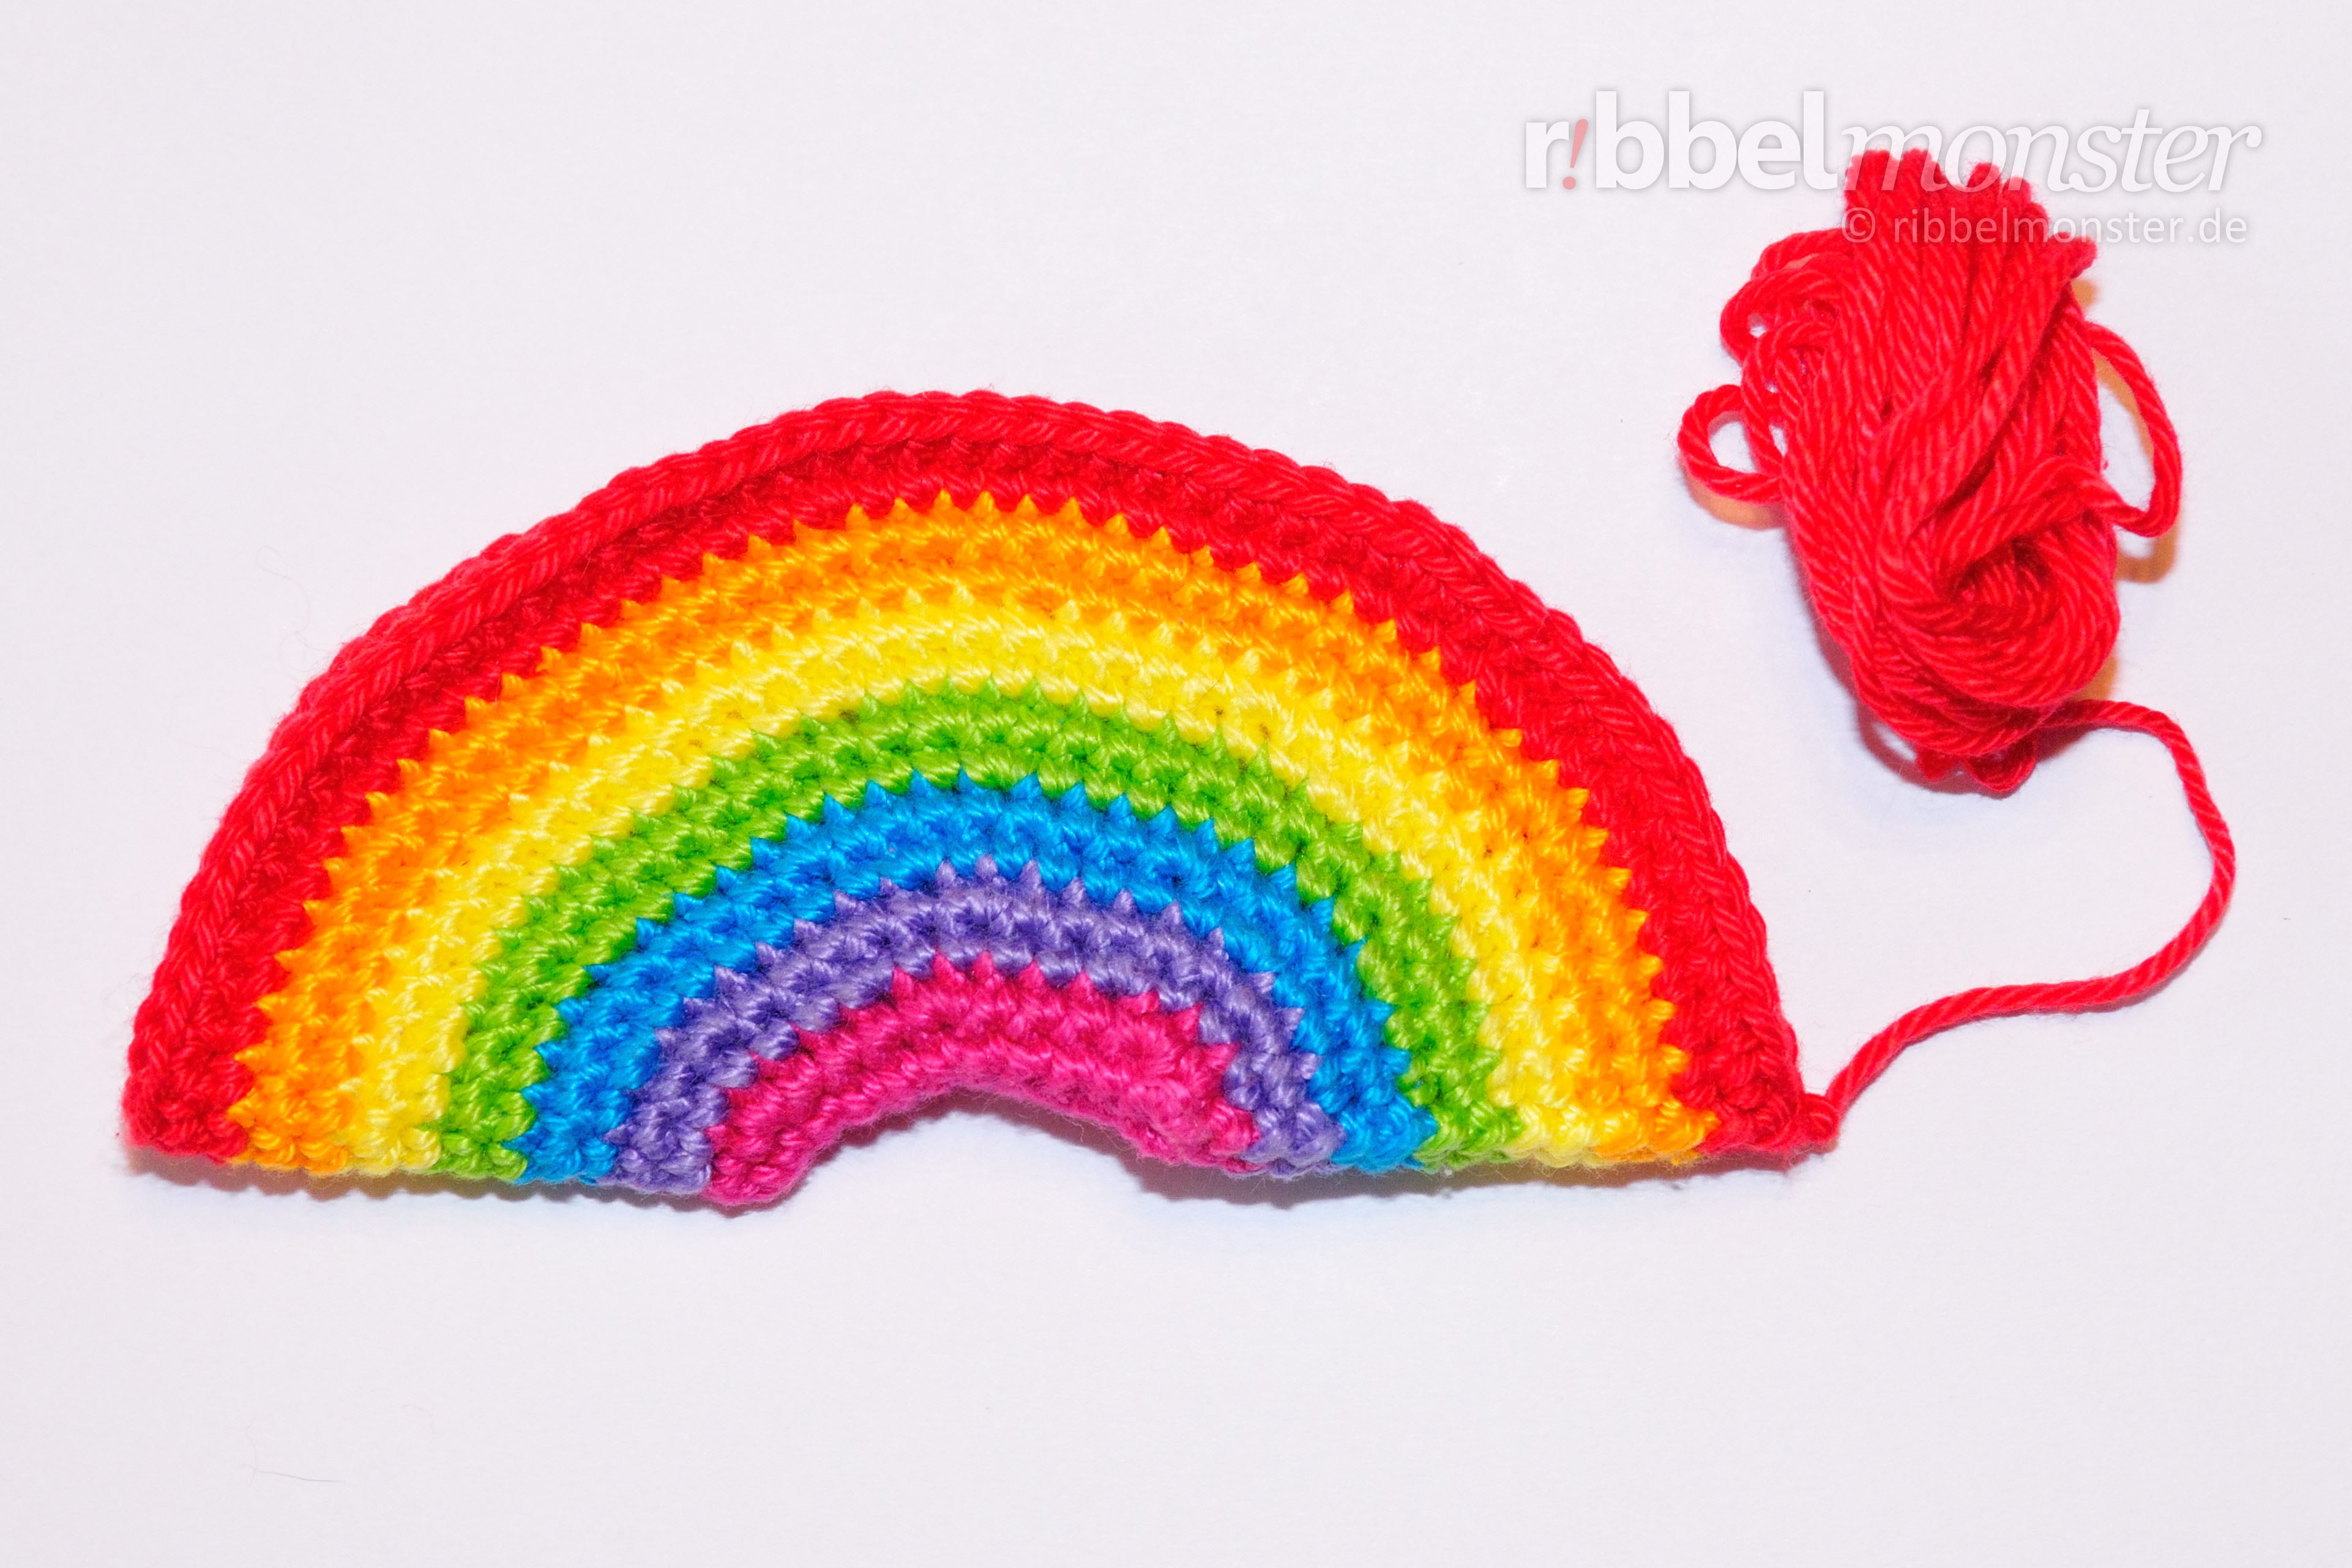 Amigurumi Crochet Smallest Rainbow Premium Free Patterns Ribbelmonster